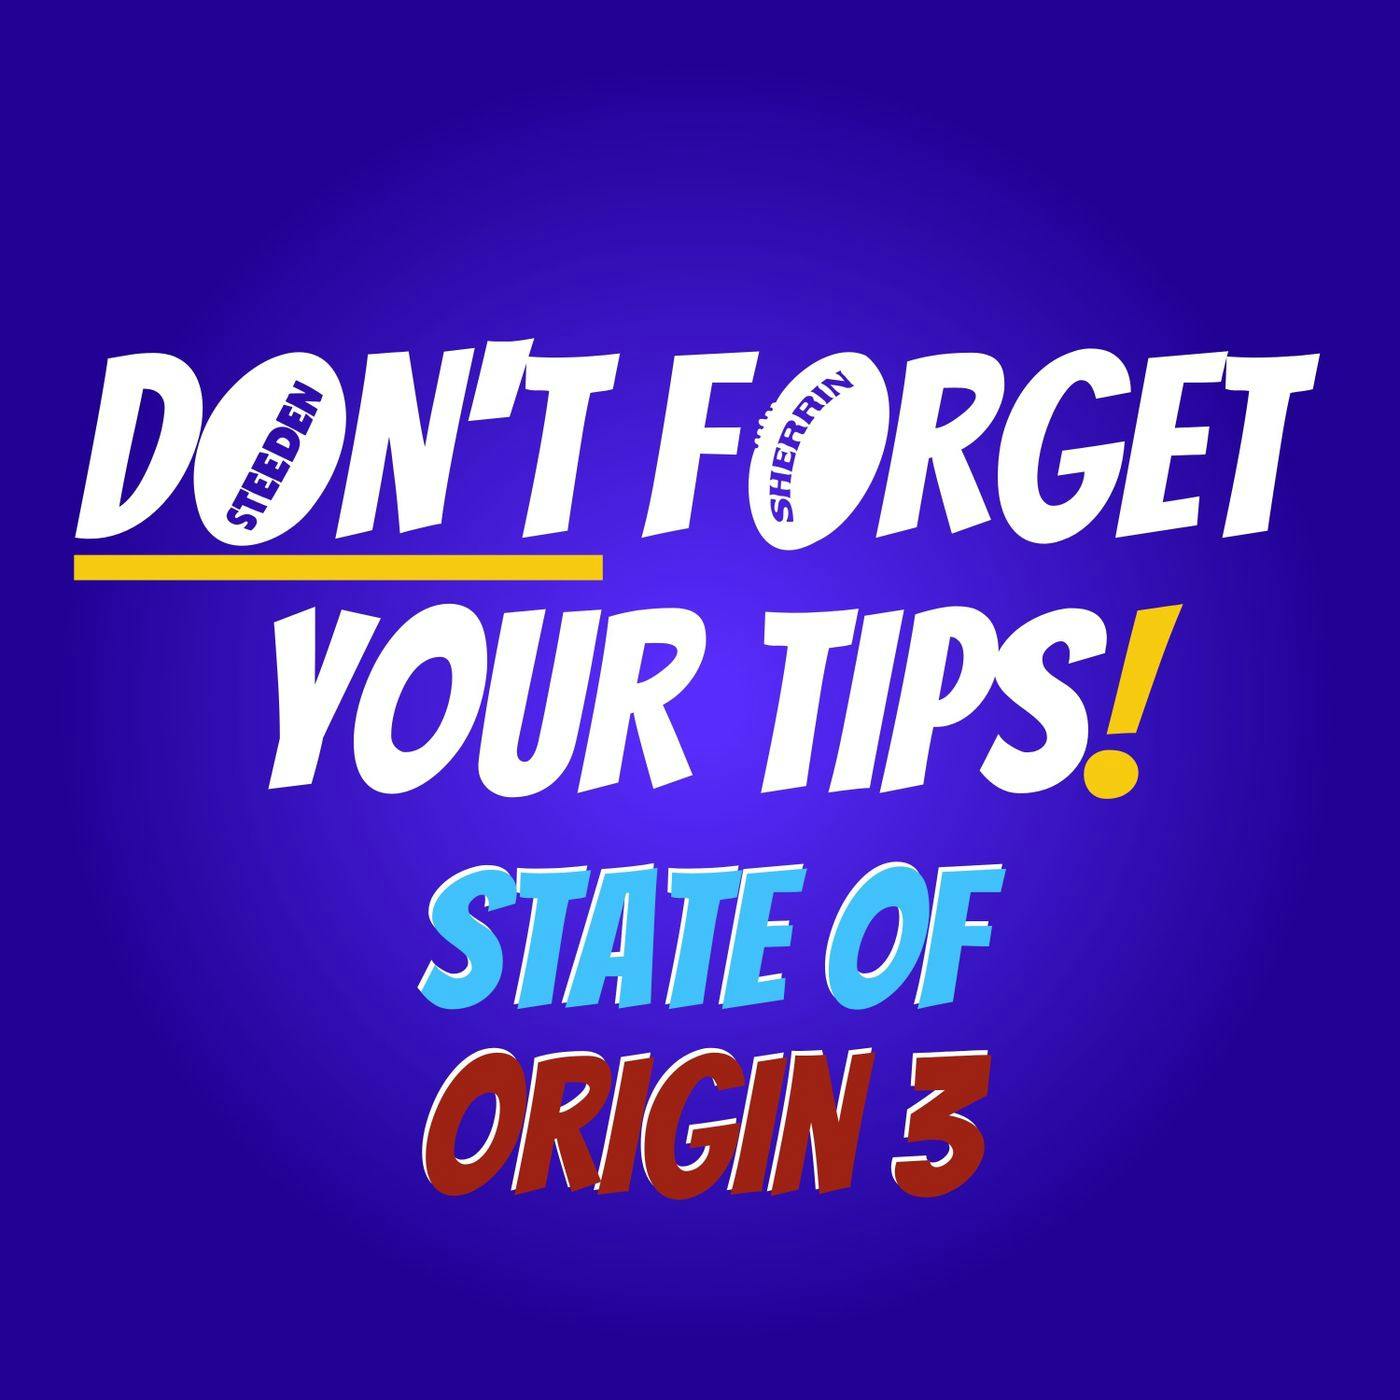 State of Origin 3 Special